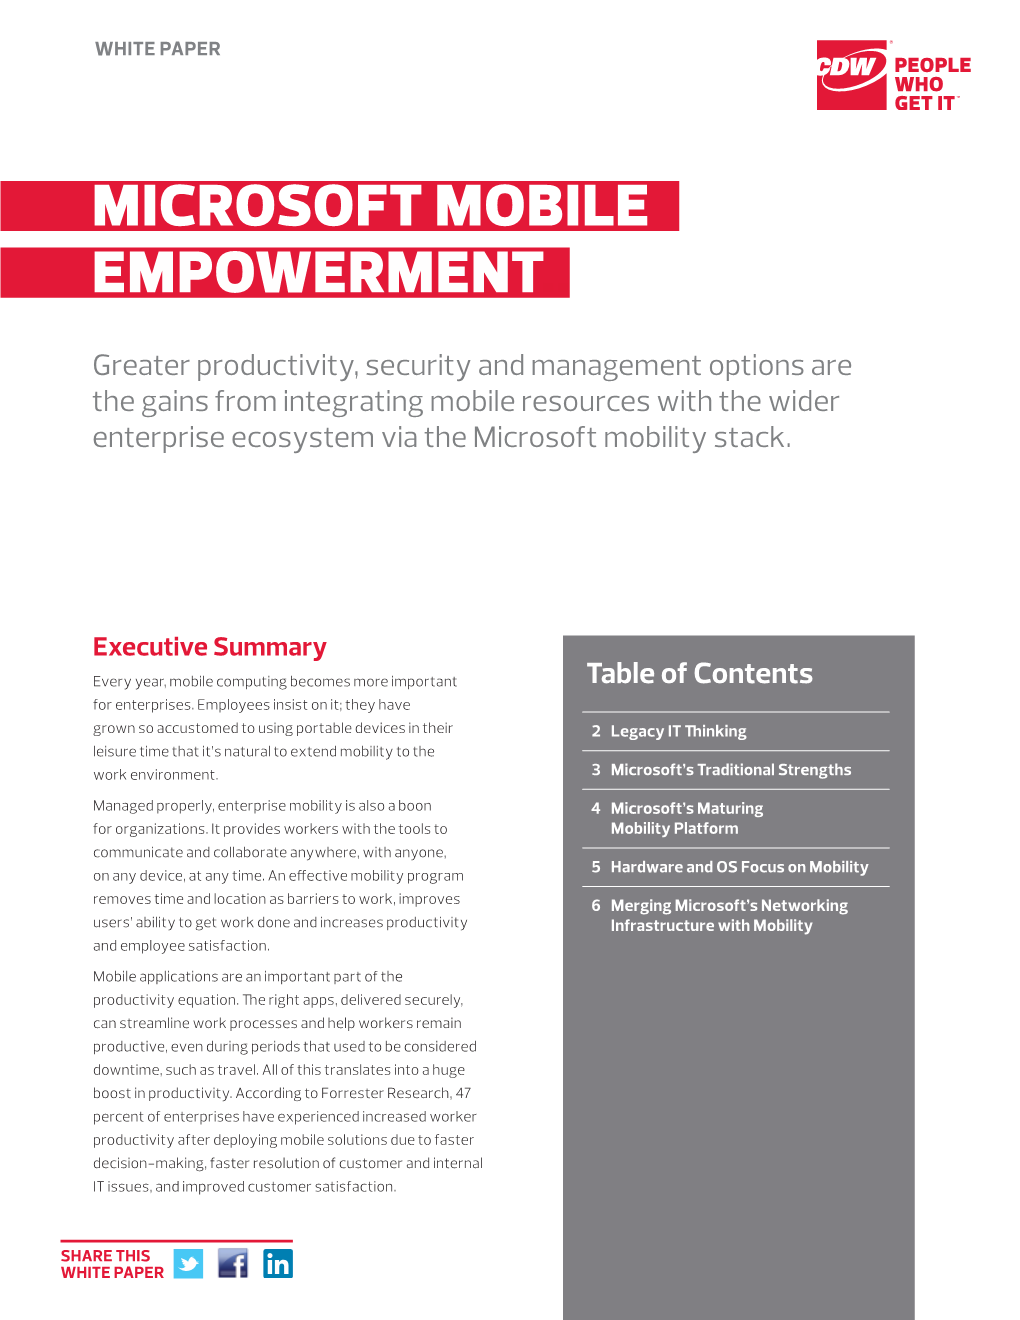 Microsoft: Mobile Empowerment